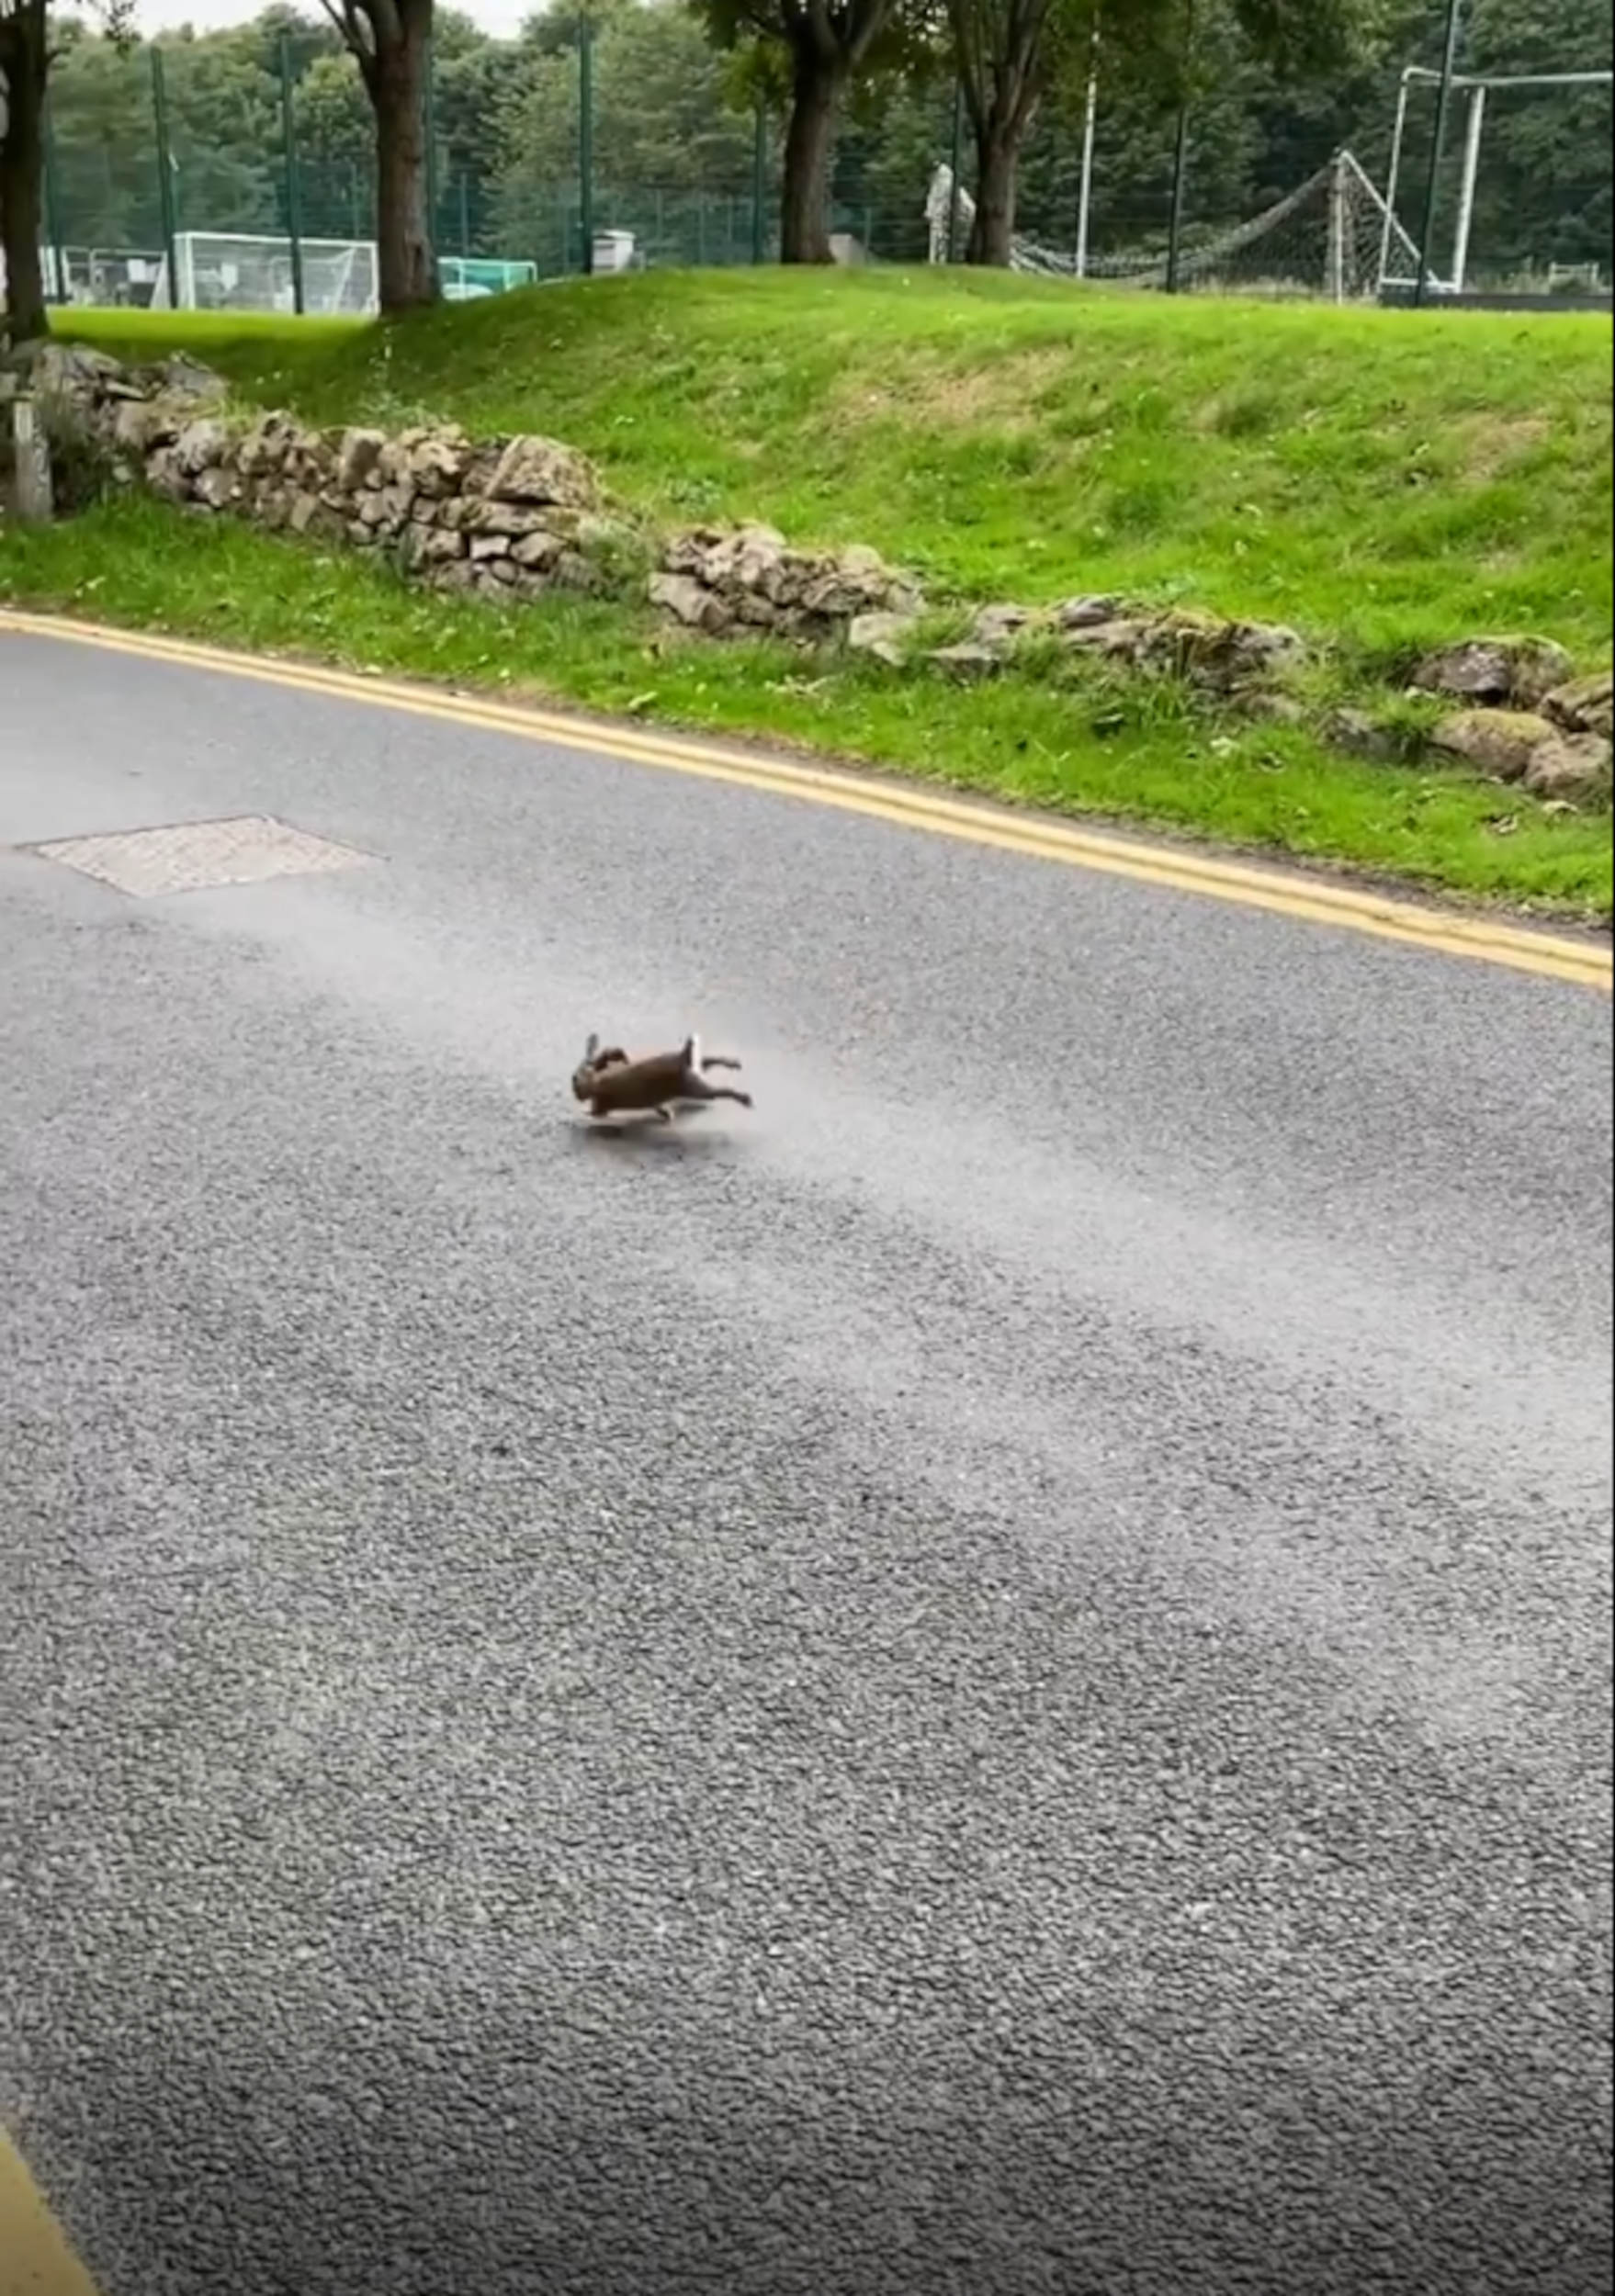 Rabbit and Stoat on road - Wildlife News Scotland